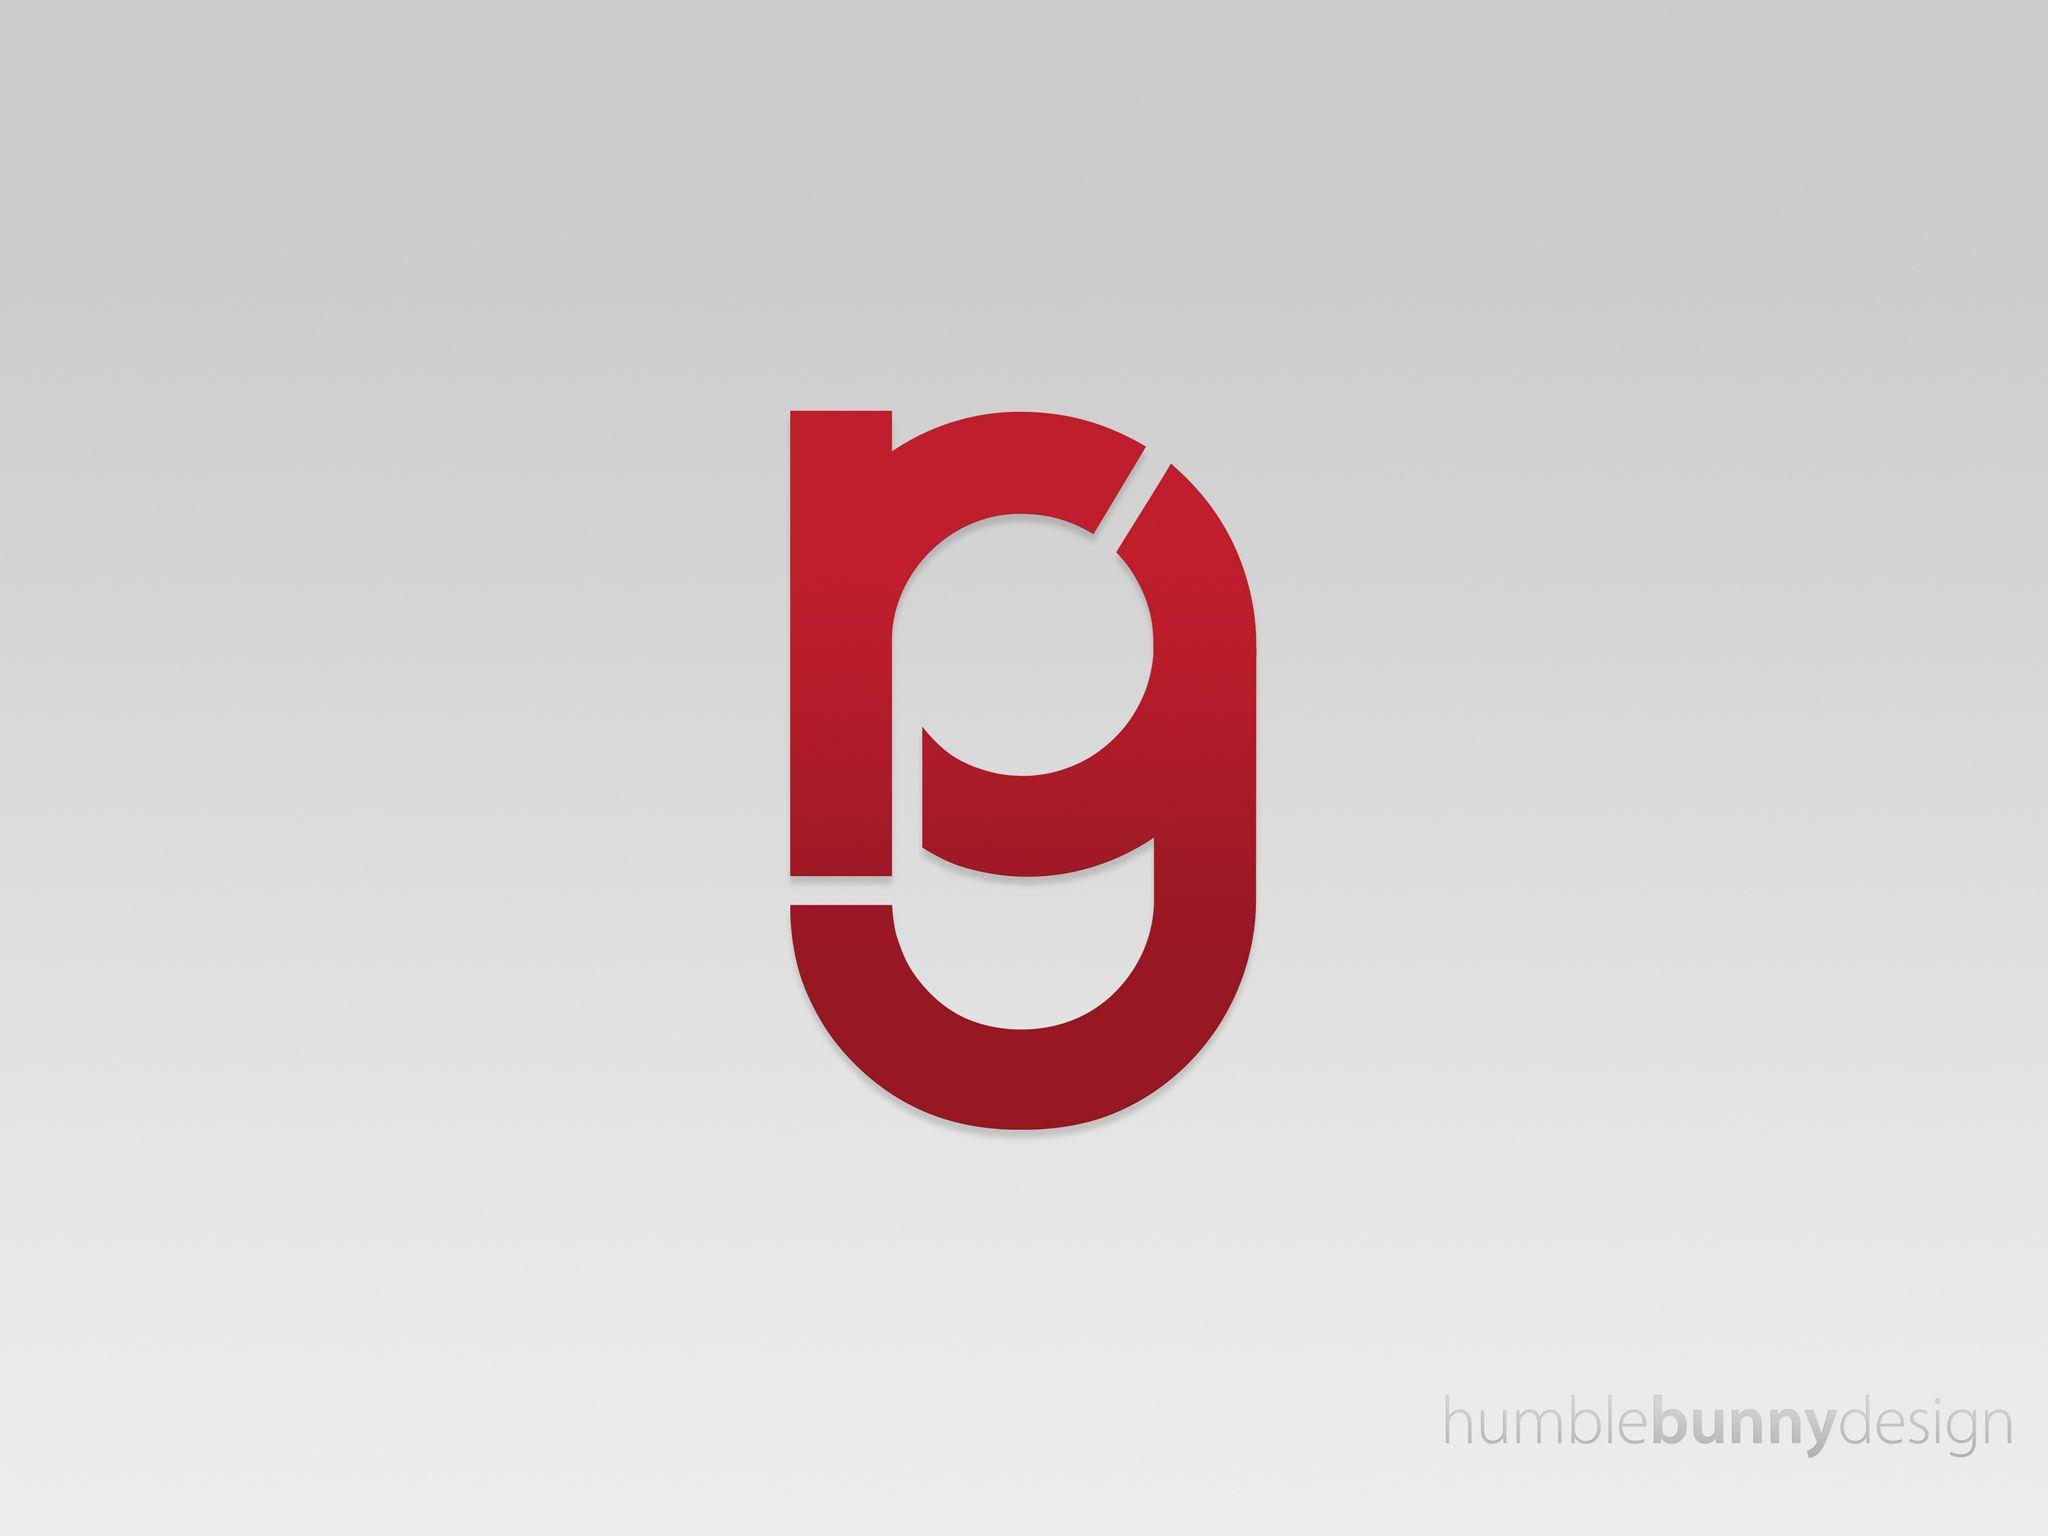 High Resolution LinkedIn Logo - 16 Pinterest Logo Icon High Res Images - Pinterest Logo Transparent ...